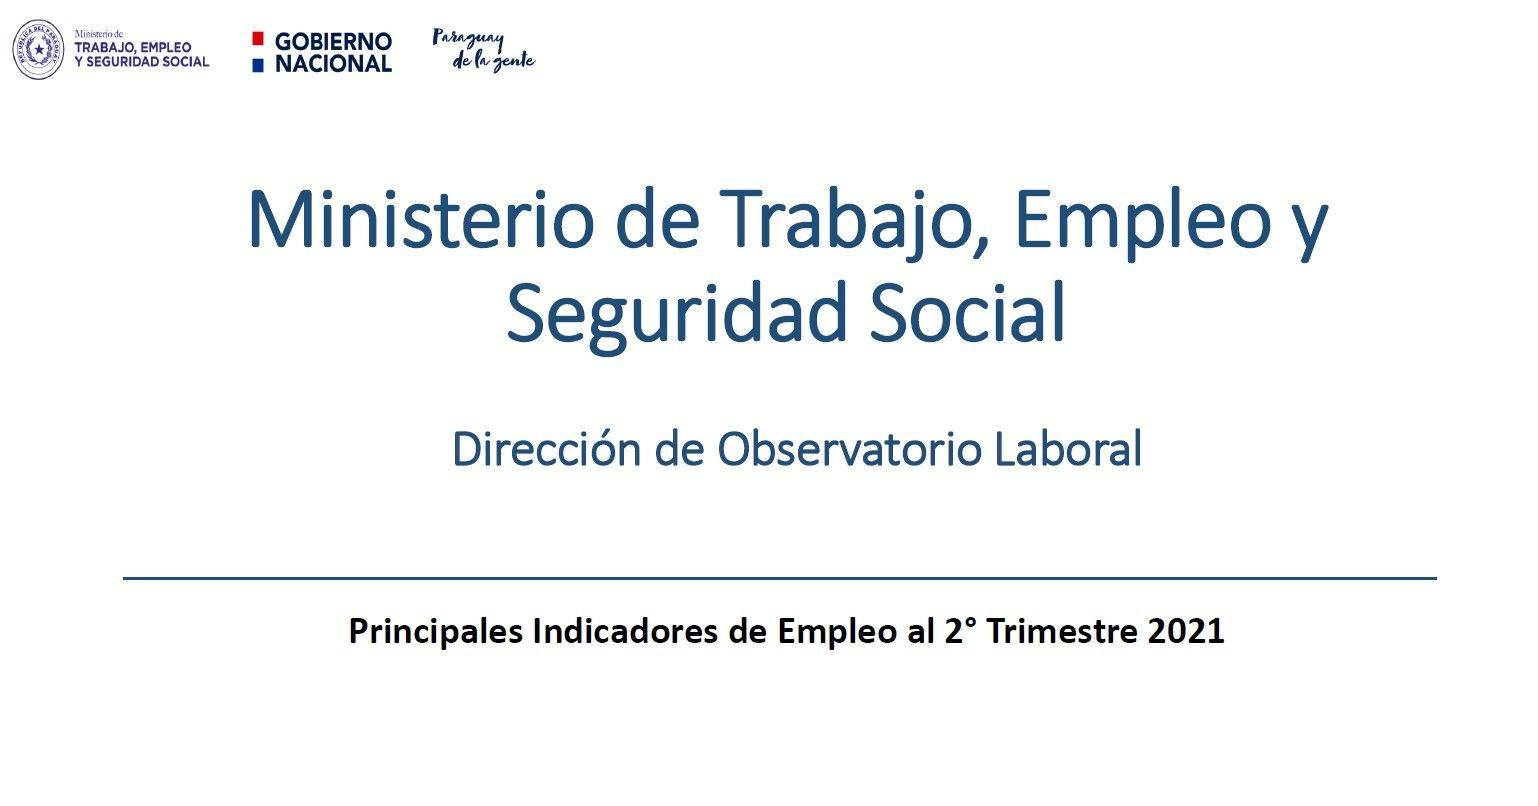 Principales_Indicadores_de_Empleo_2do_Trimestre_2021.jpg